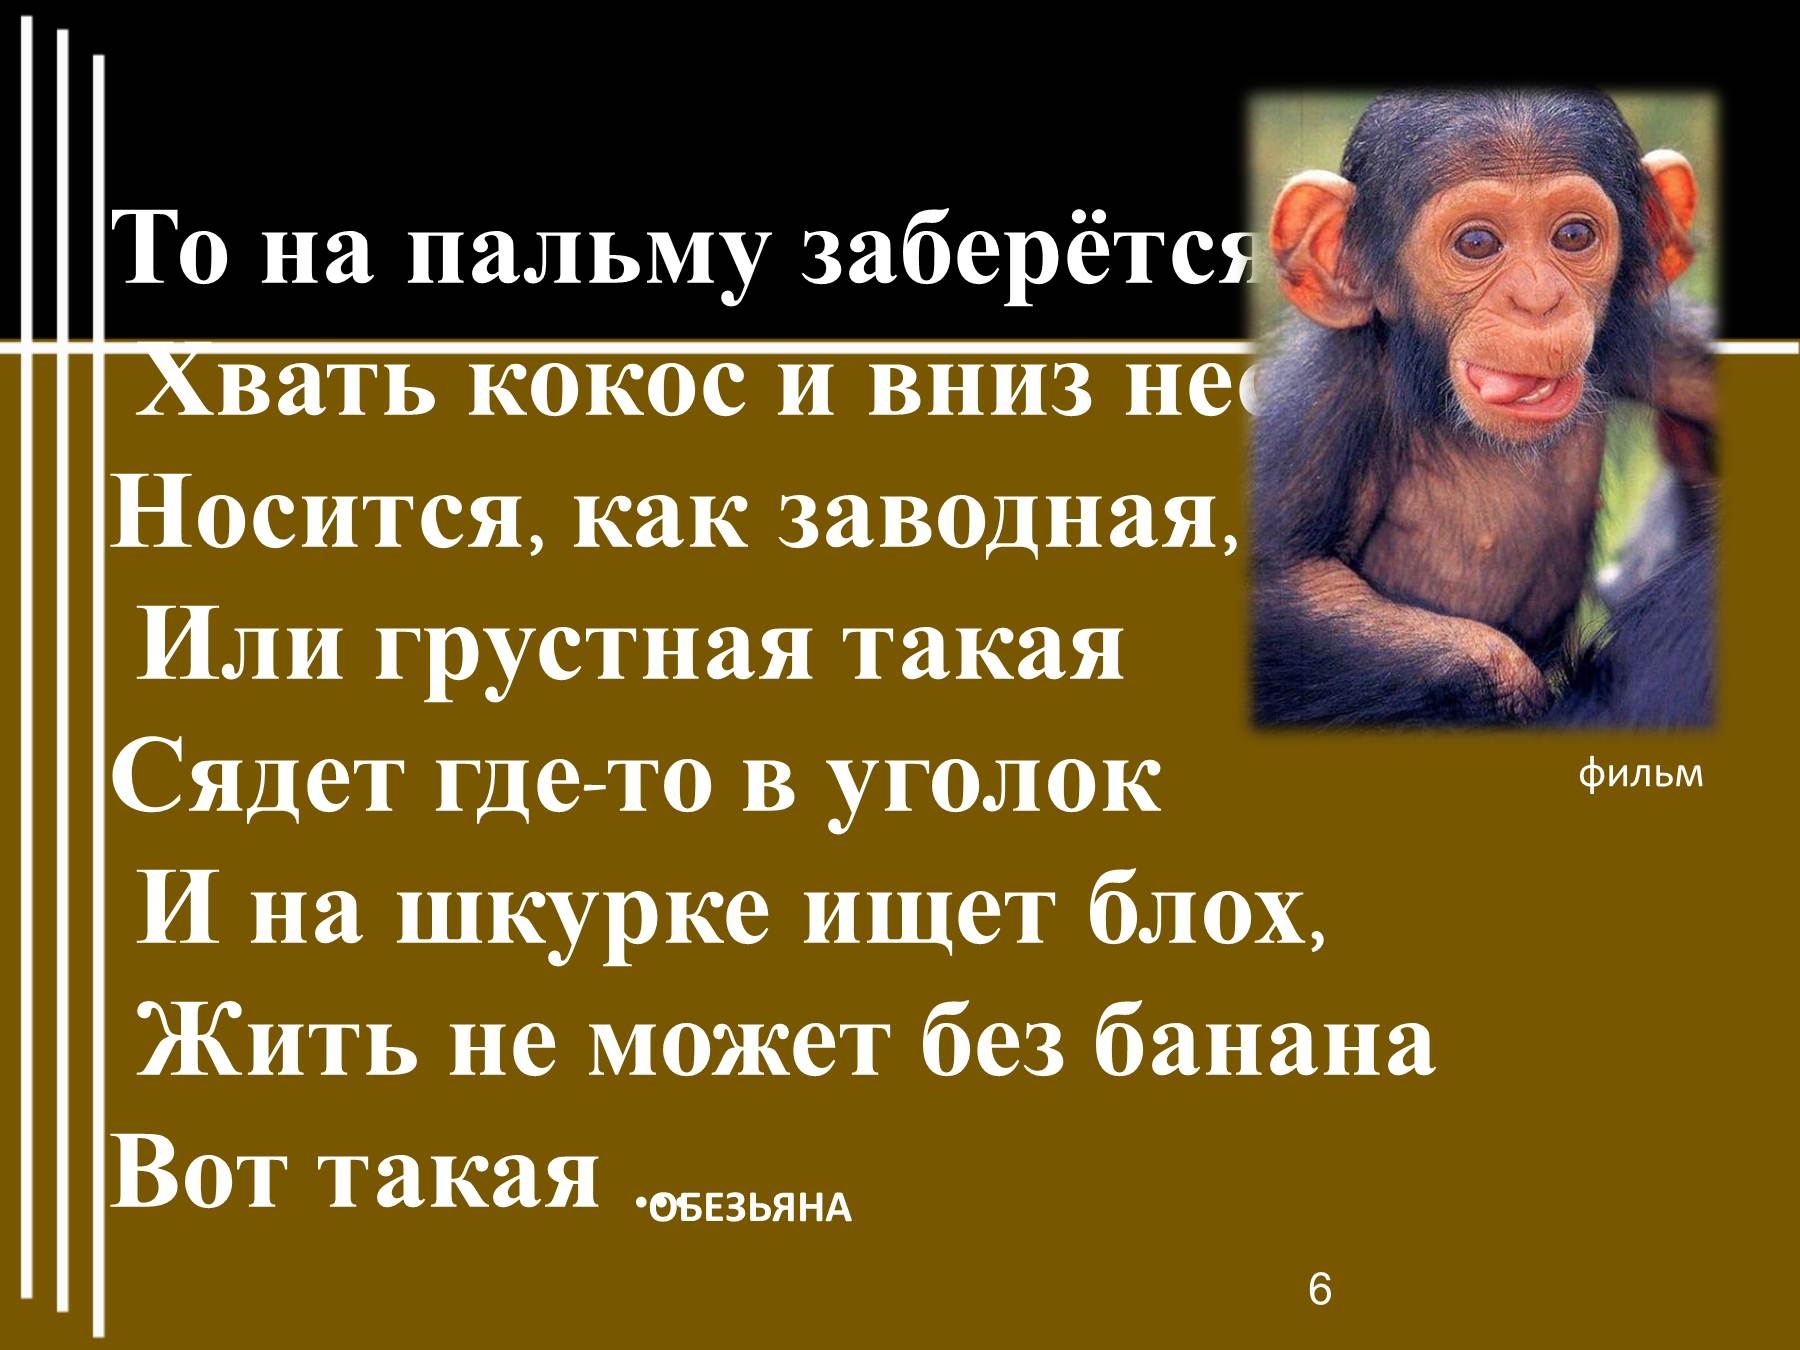 Вопросы к про обезьянку 3 класс. Про обезьянку 3 класс. Житков про обезьянку. Предложение про обезьяну. Рисунок к рассказу про обезьянку.